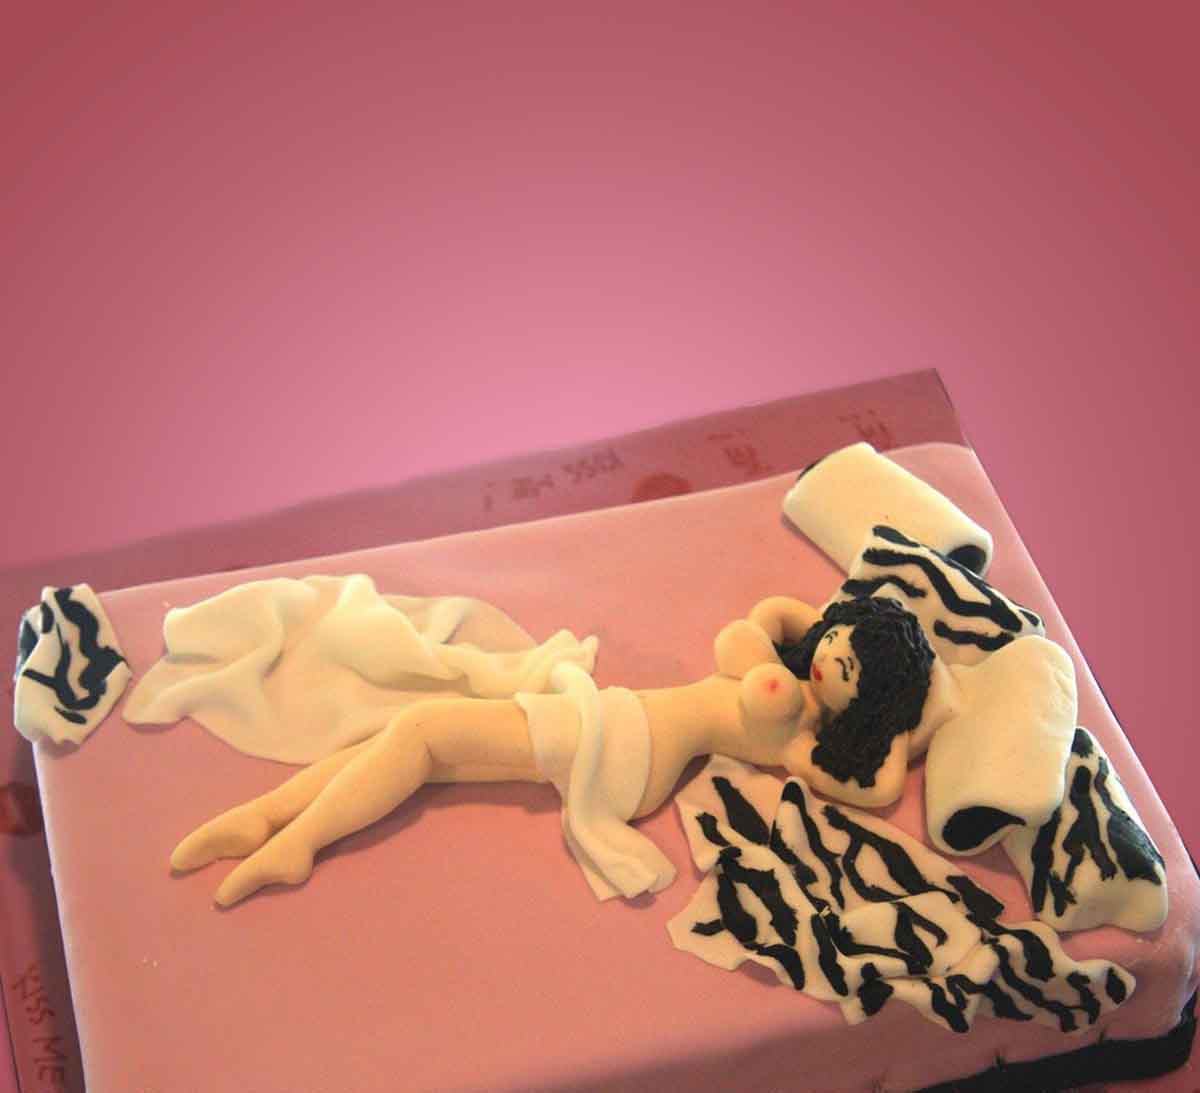 Ladies and Sexy Cakes